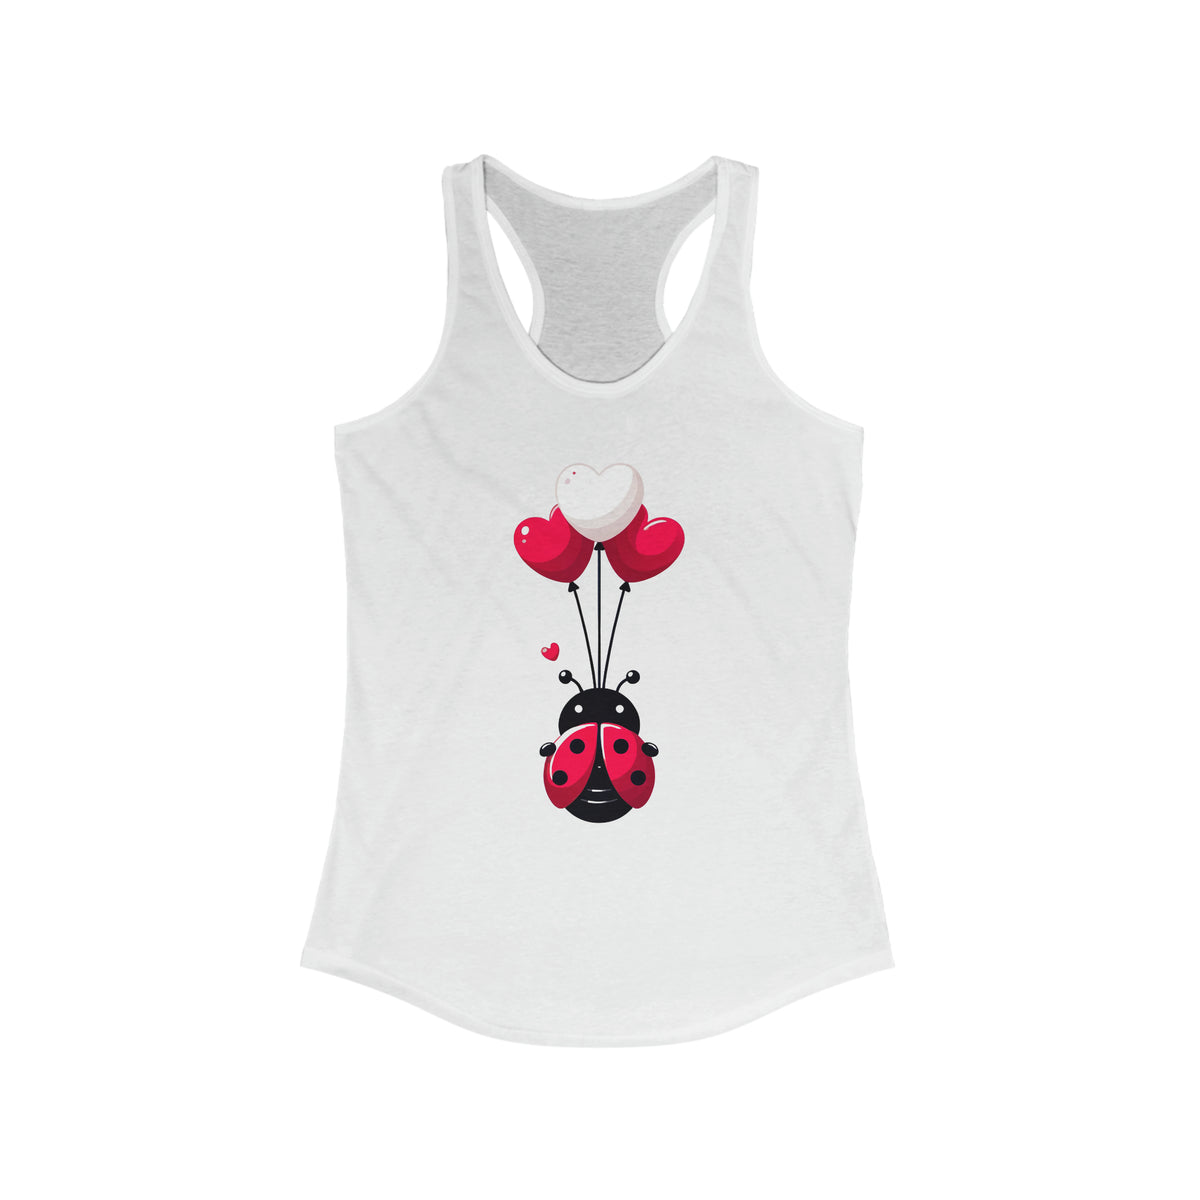 Cute Ladybug Heart Balloons Valentine Shirt | Ladybug Lover Gift | Lady Bug Shirt |  Women's Ideal Racerback Tank